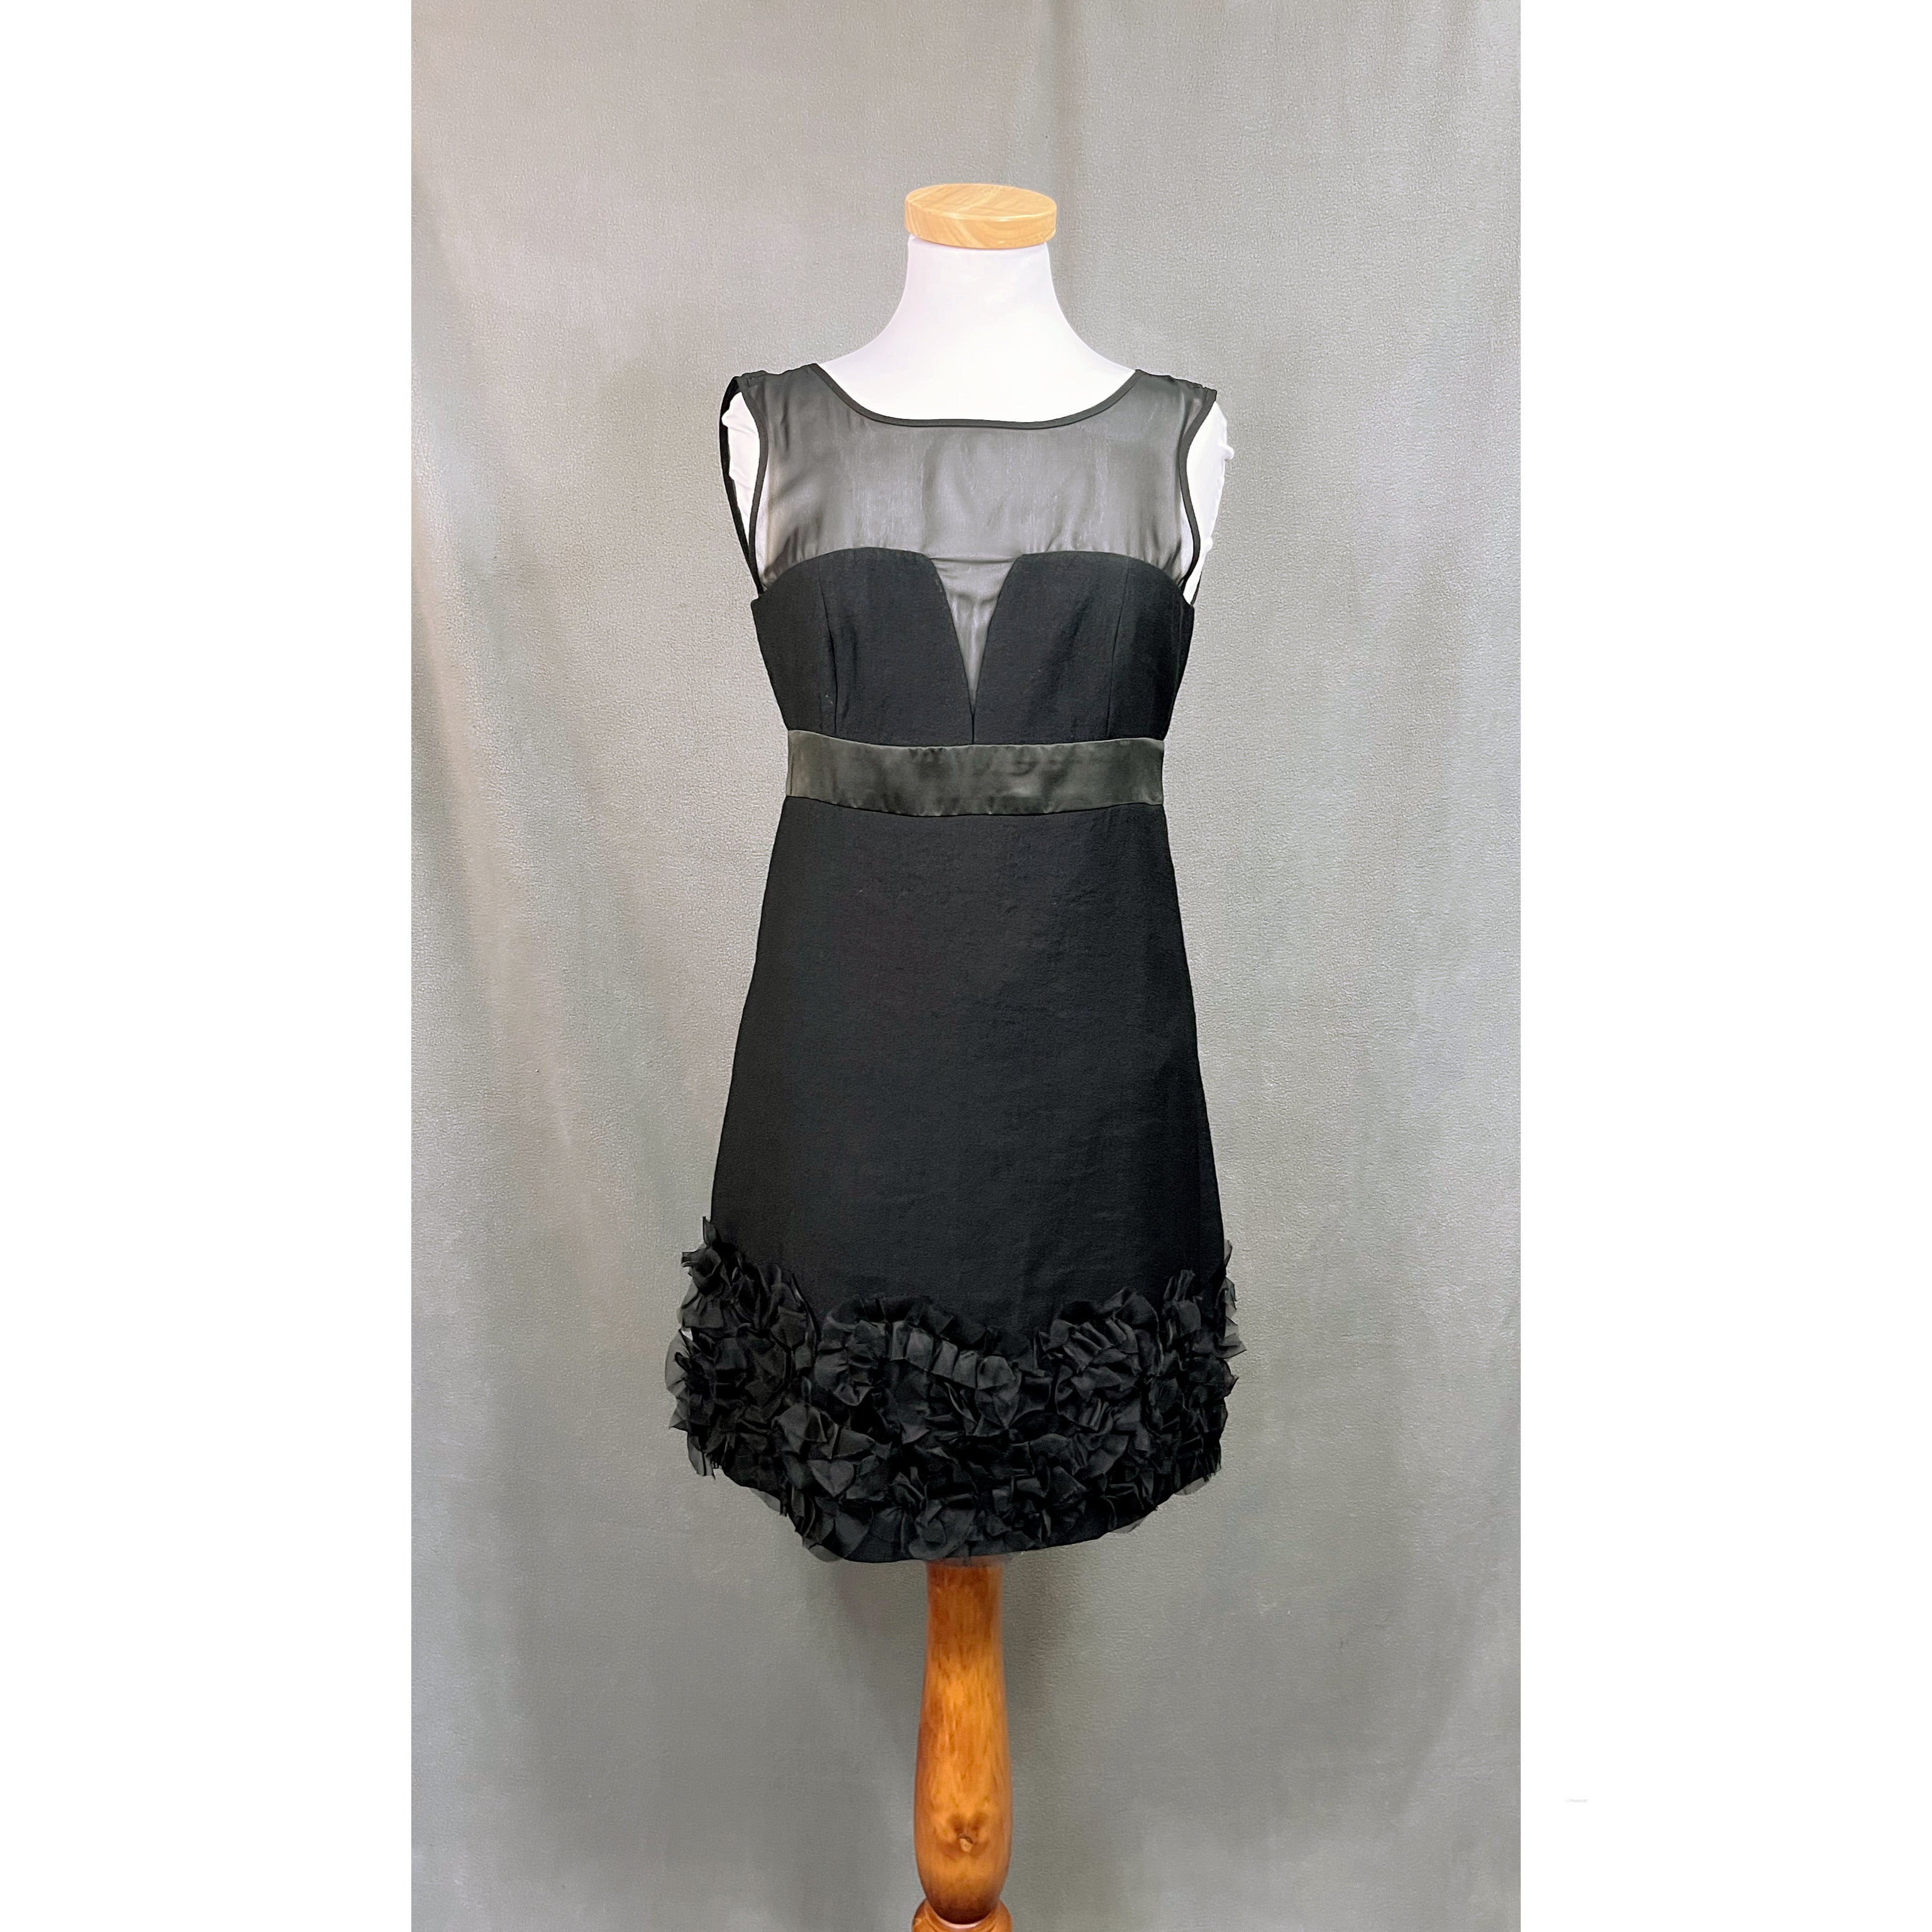 Max & Cleo black dress, size 2